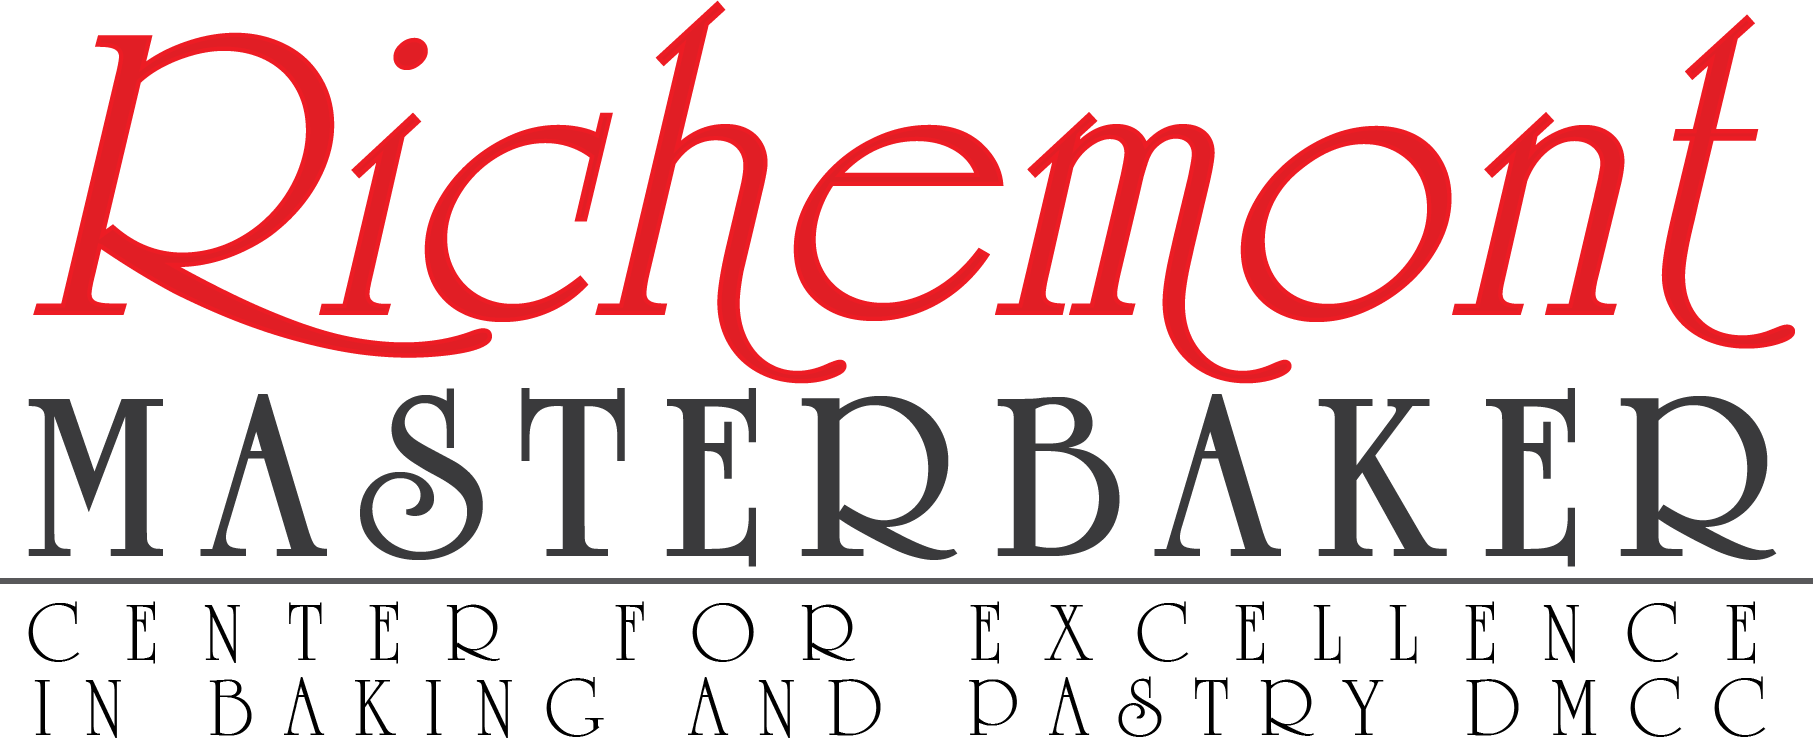 Richemont Masterbaker Center of Excellence Logo